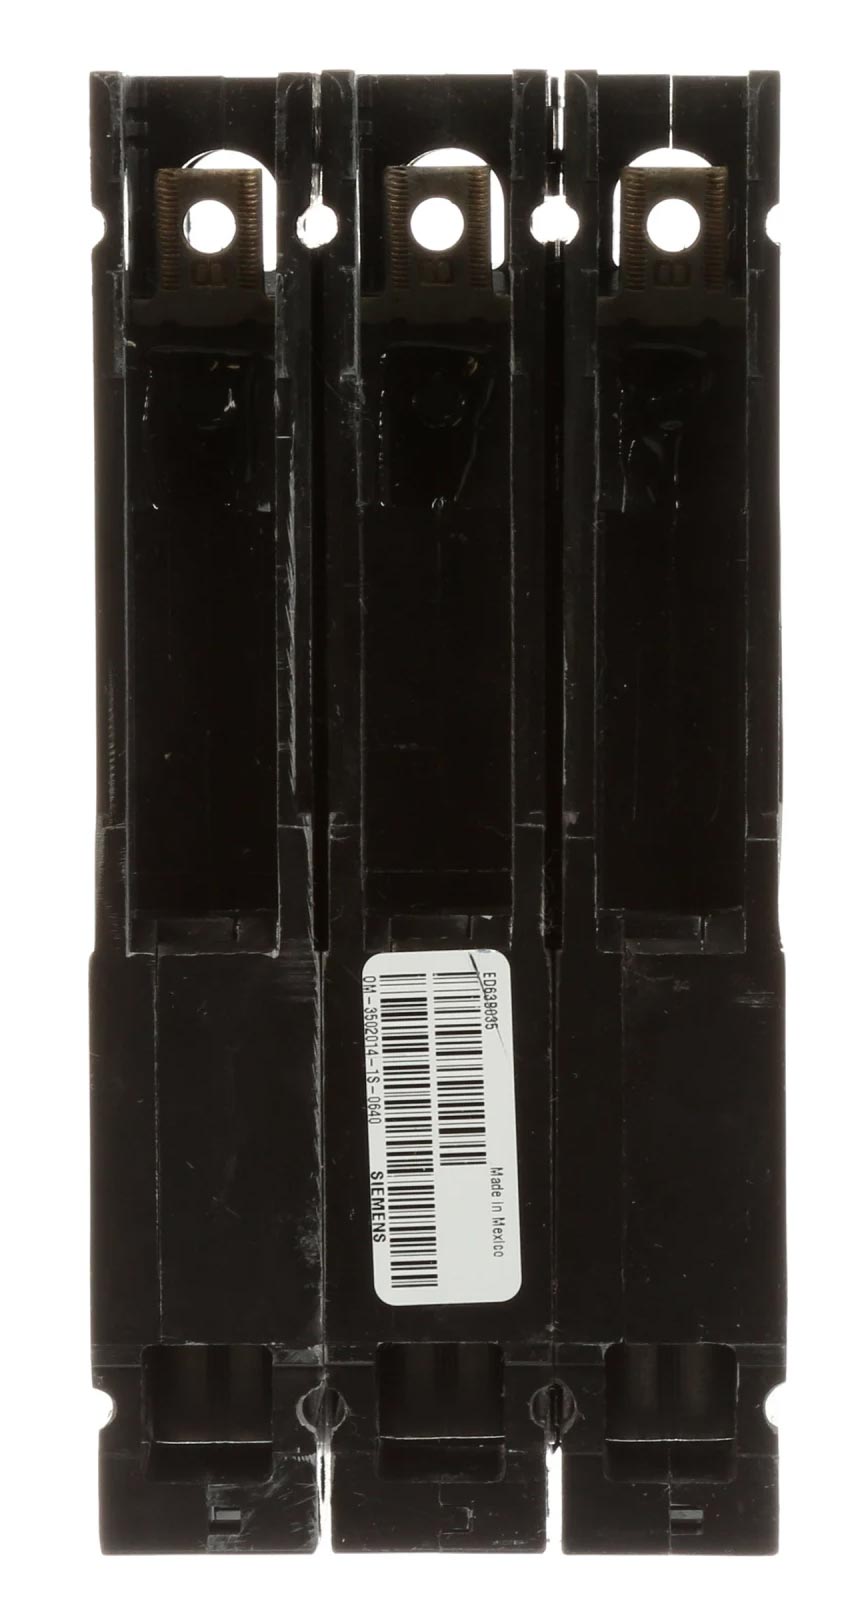 ED63B045 - Siemens - Moded Case Circuit Breaker